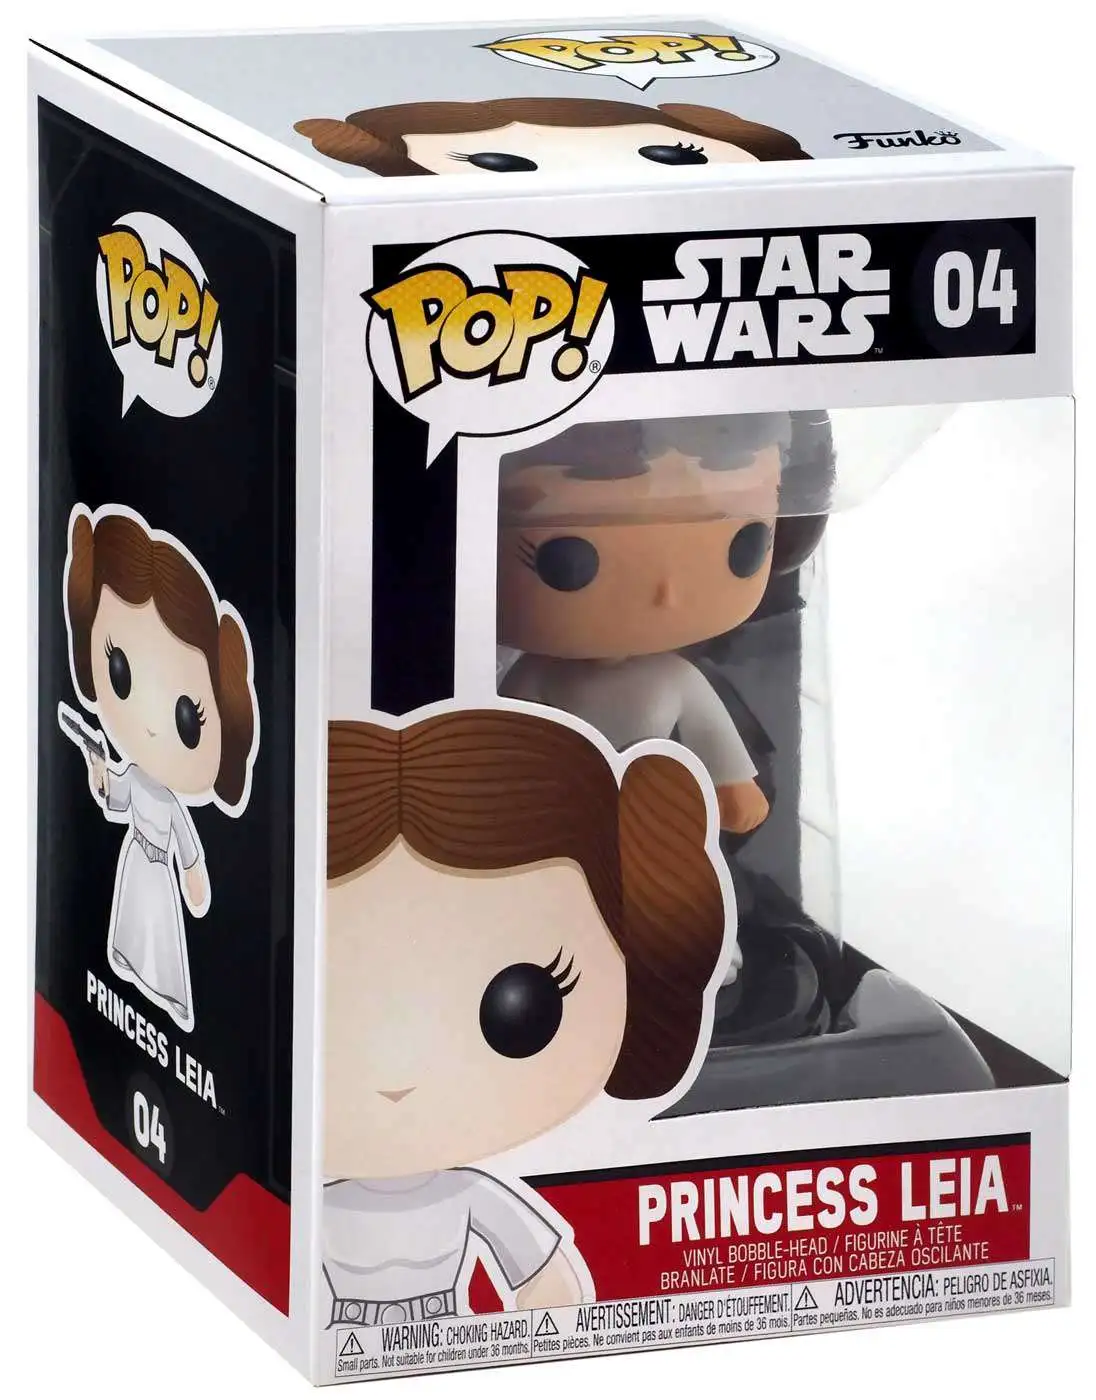 Star Wars Princess Leia Pop Funko Vinyl Figure Bobble Head #04 